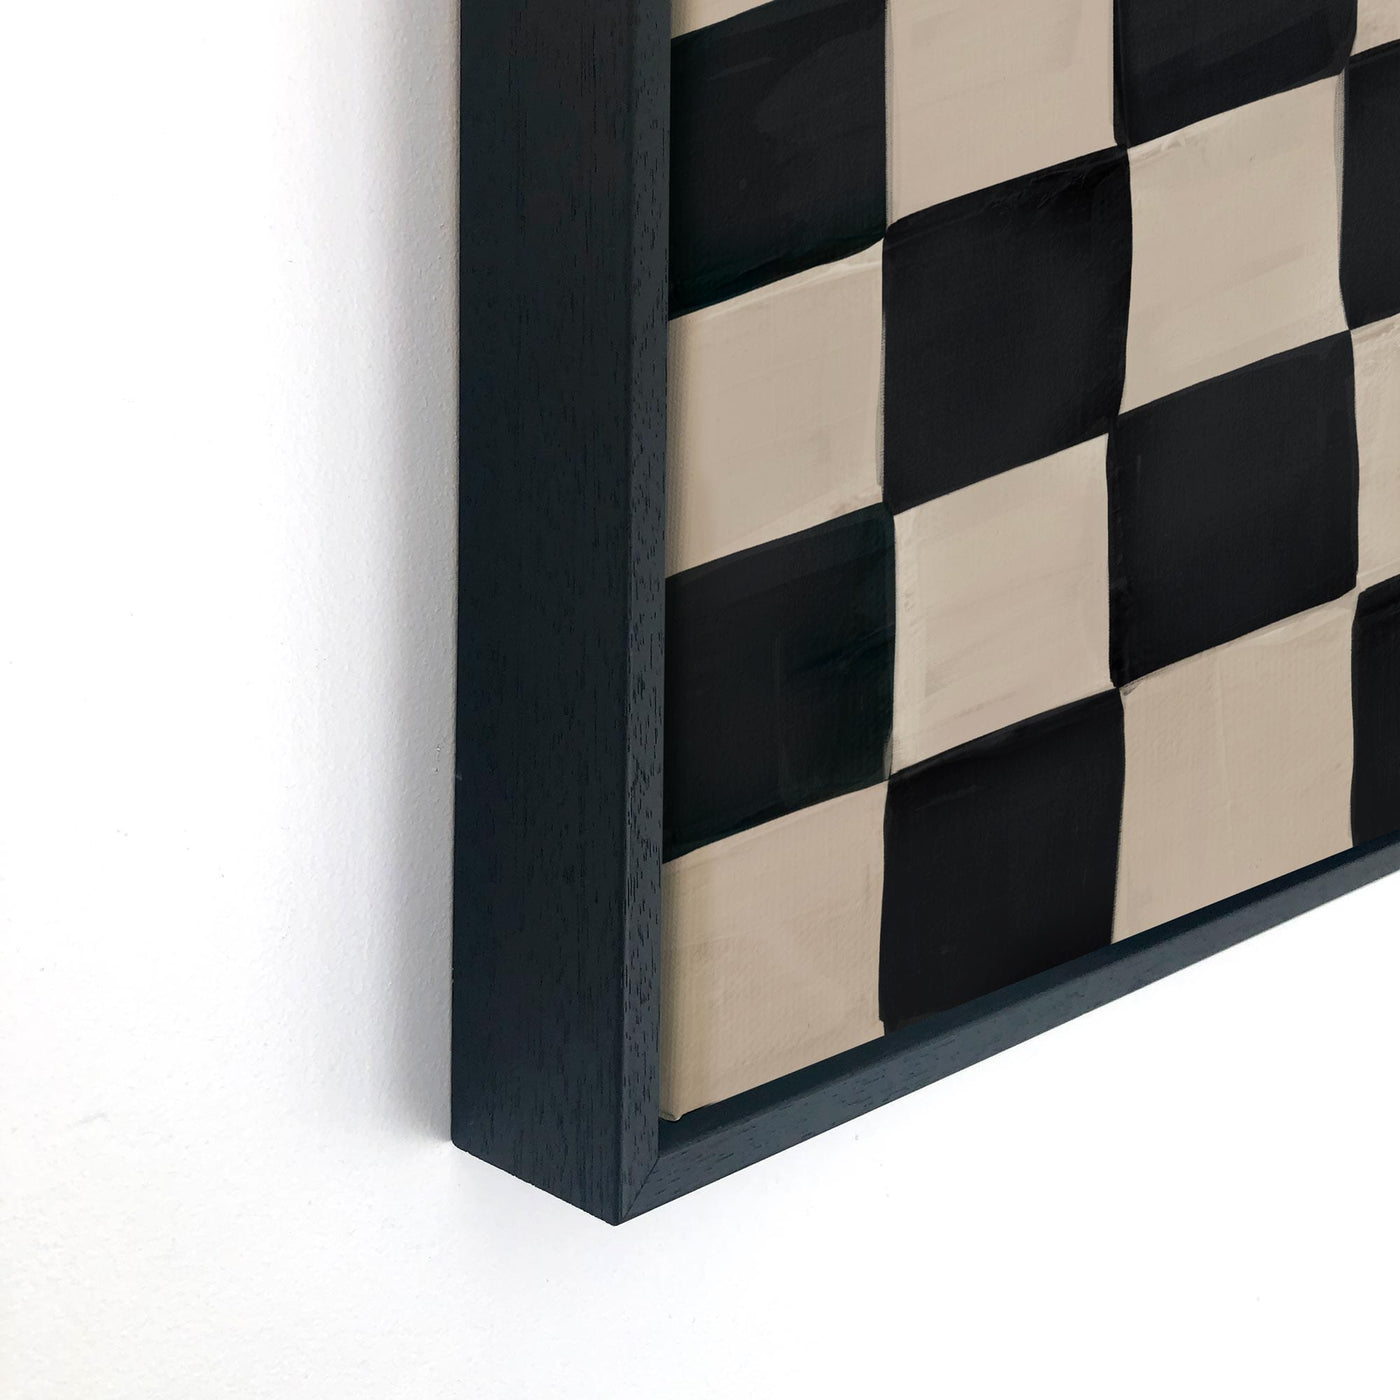 Green Lili Black & Neutral Checkerboard Framed Canvas Art